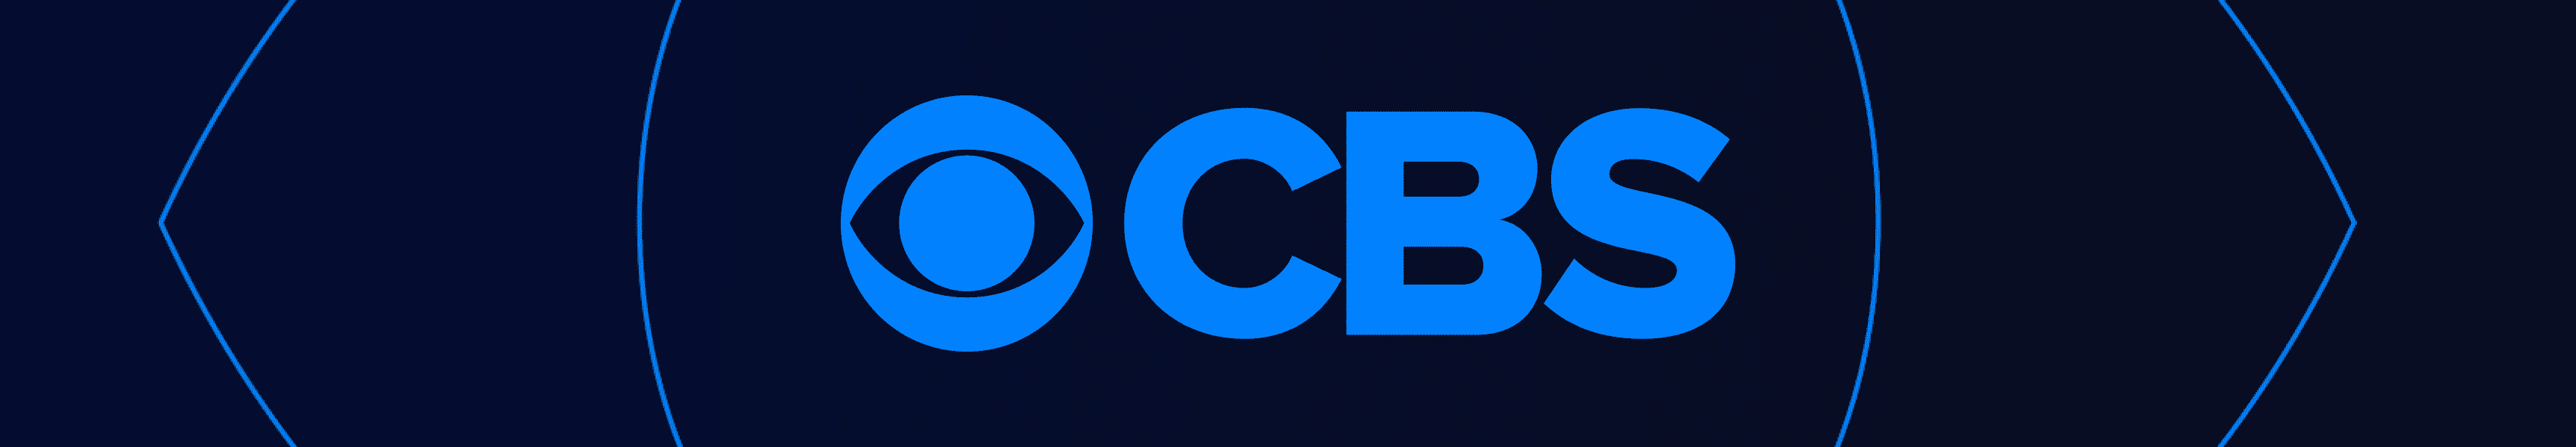 CBS Bar Zubehör